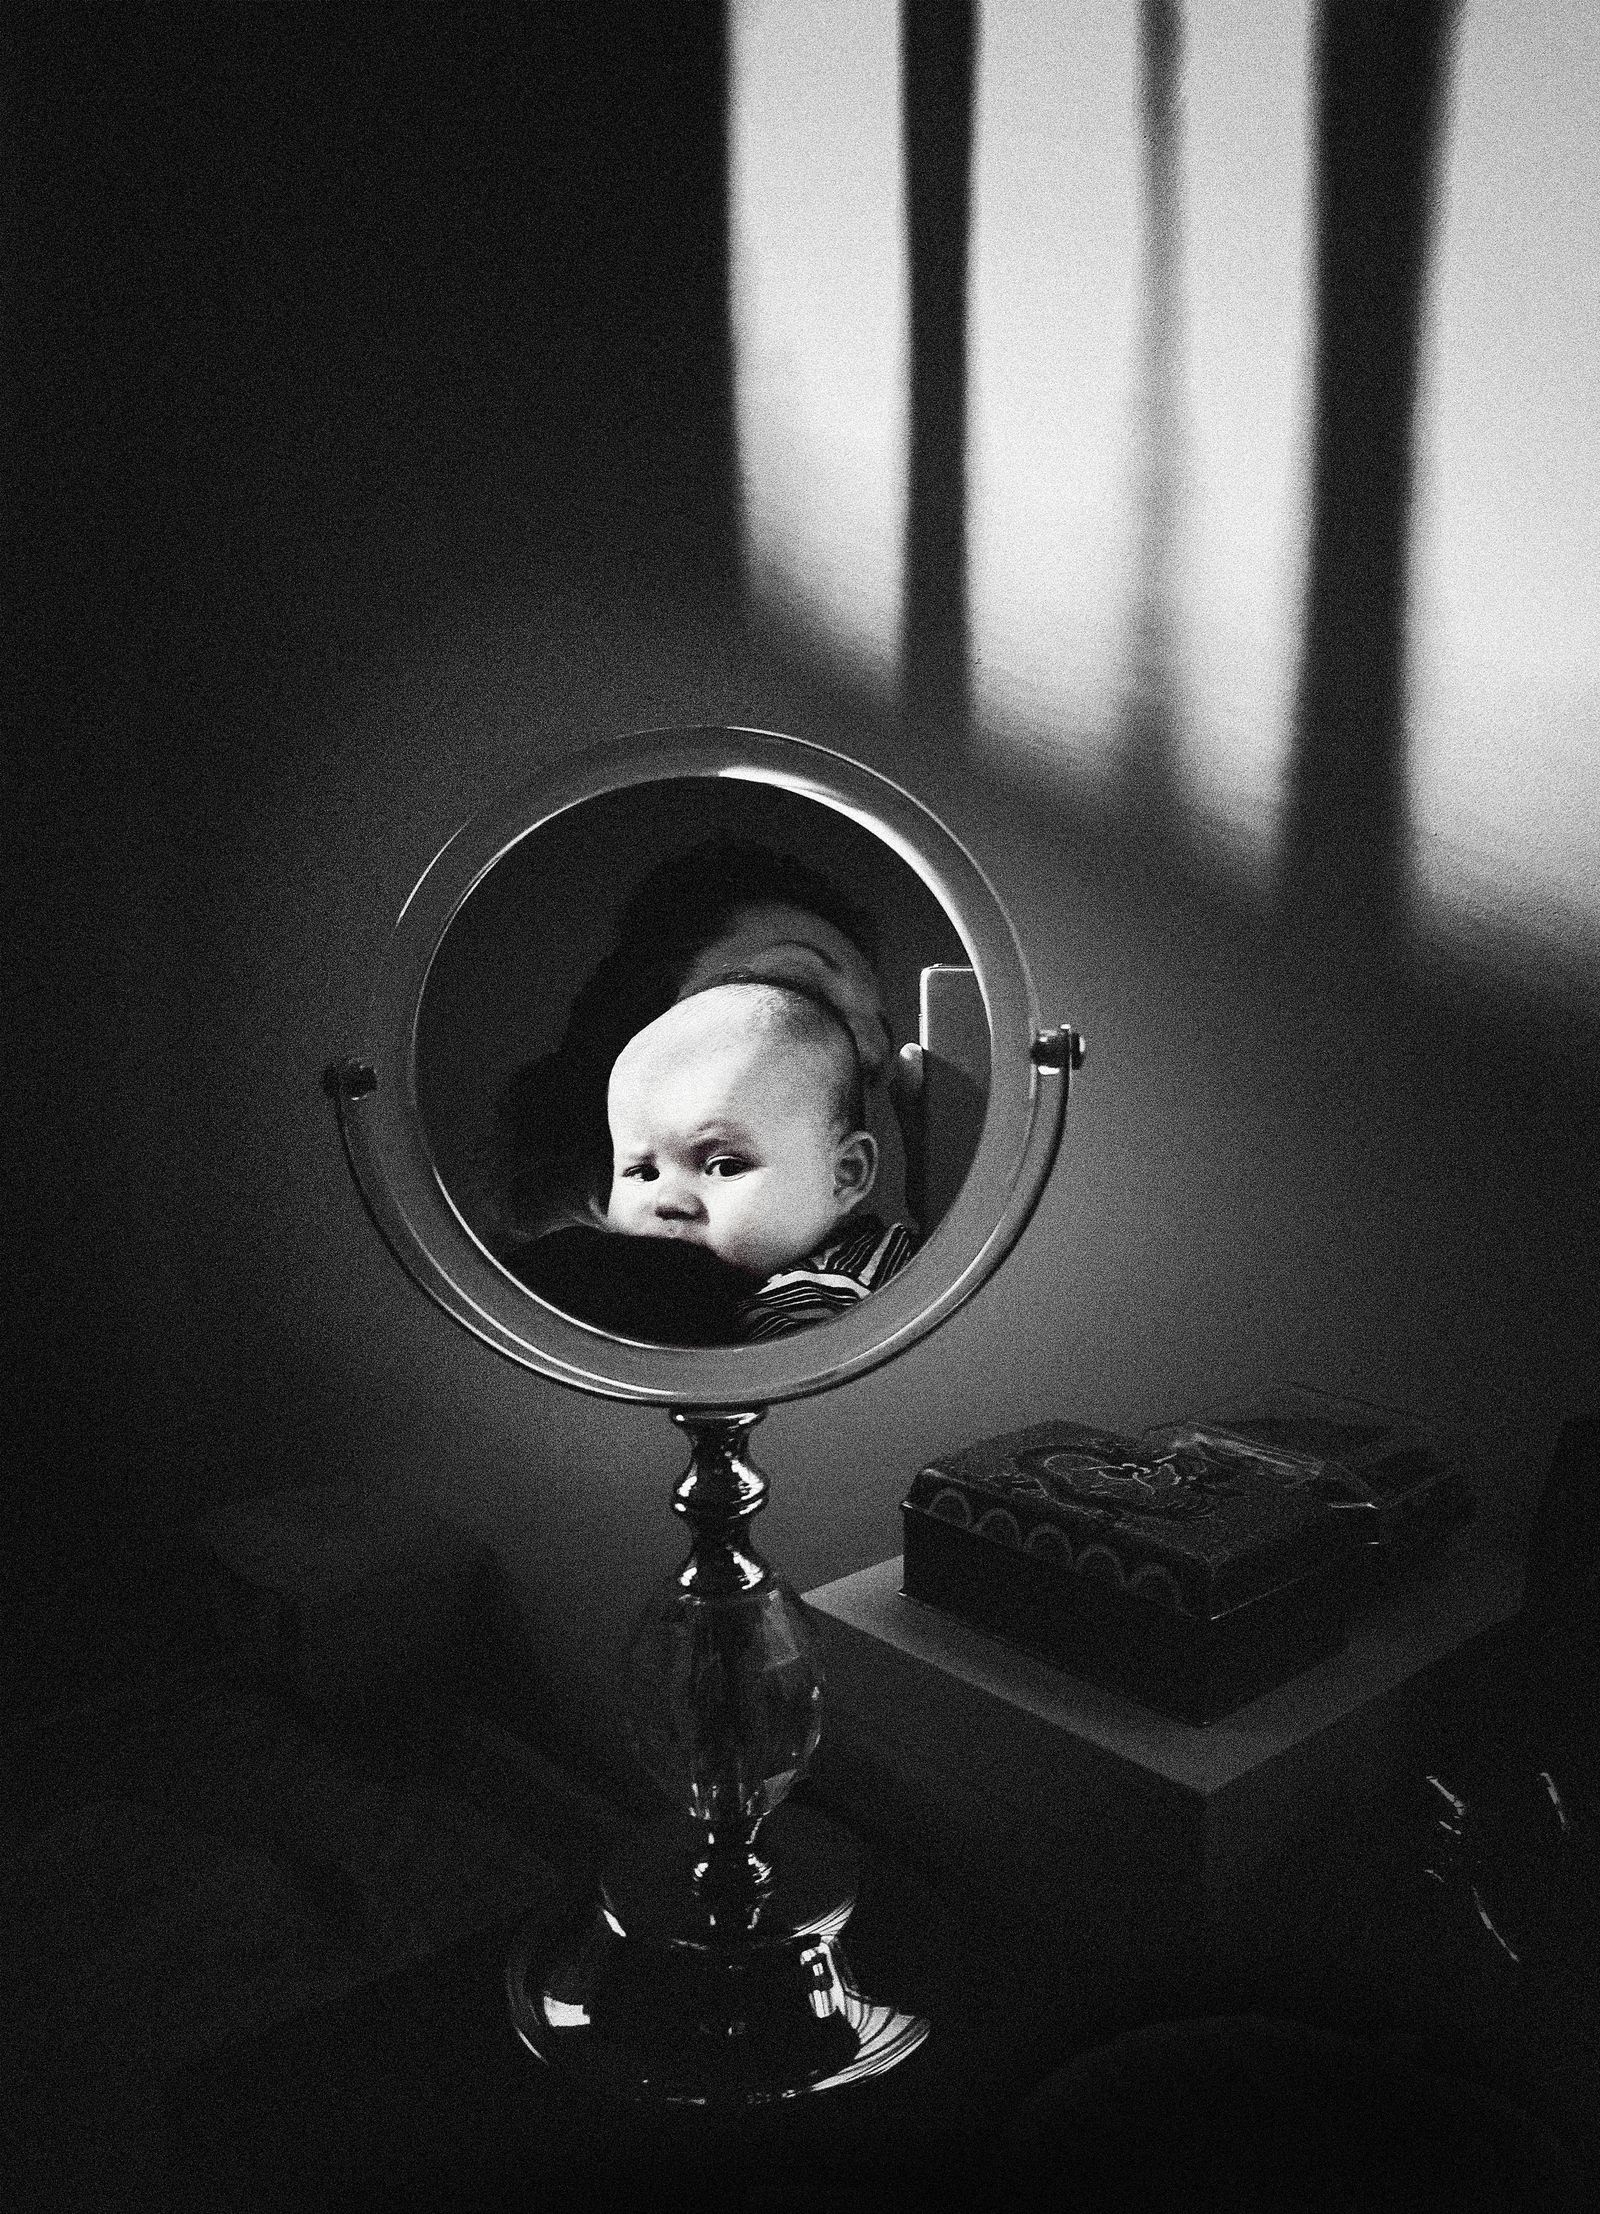 © Katya Evdokimova - Image from the Hidden Selfies photography project